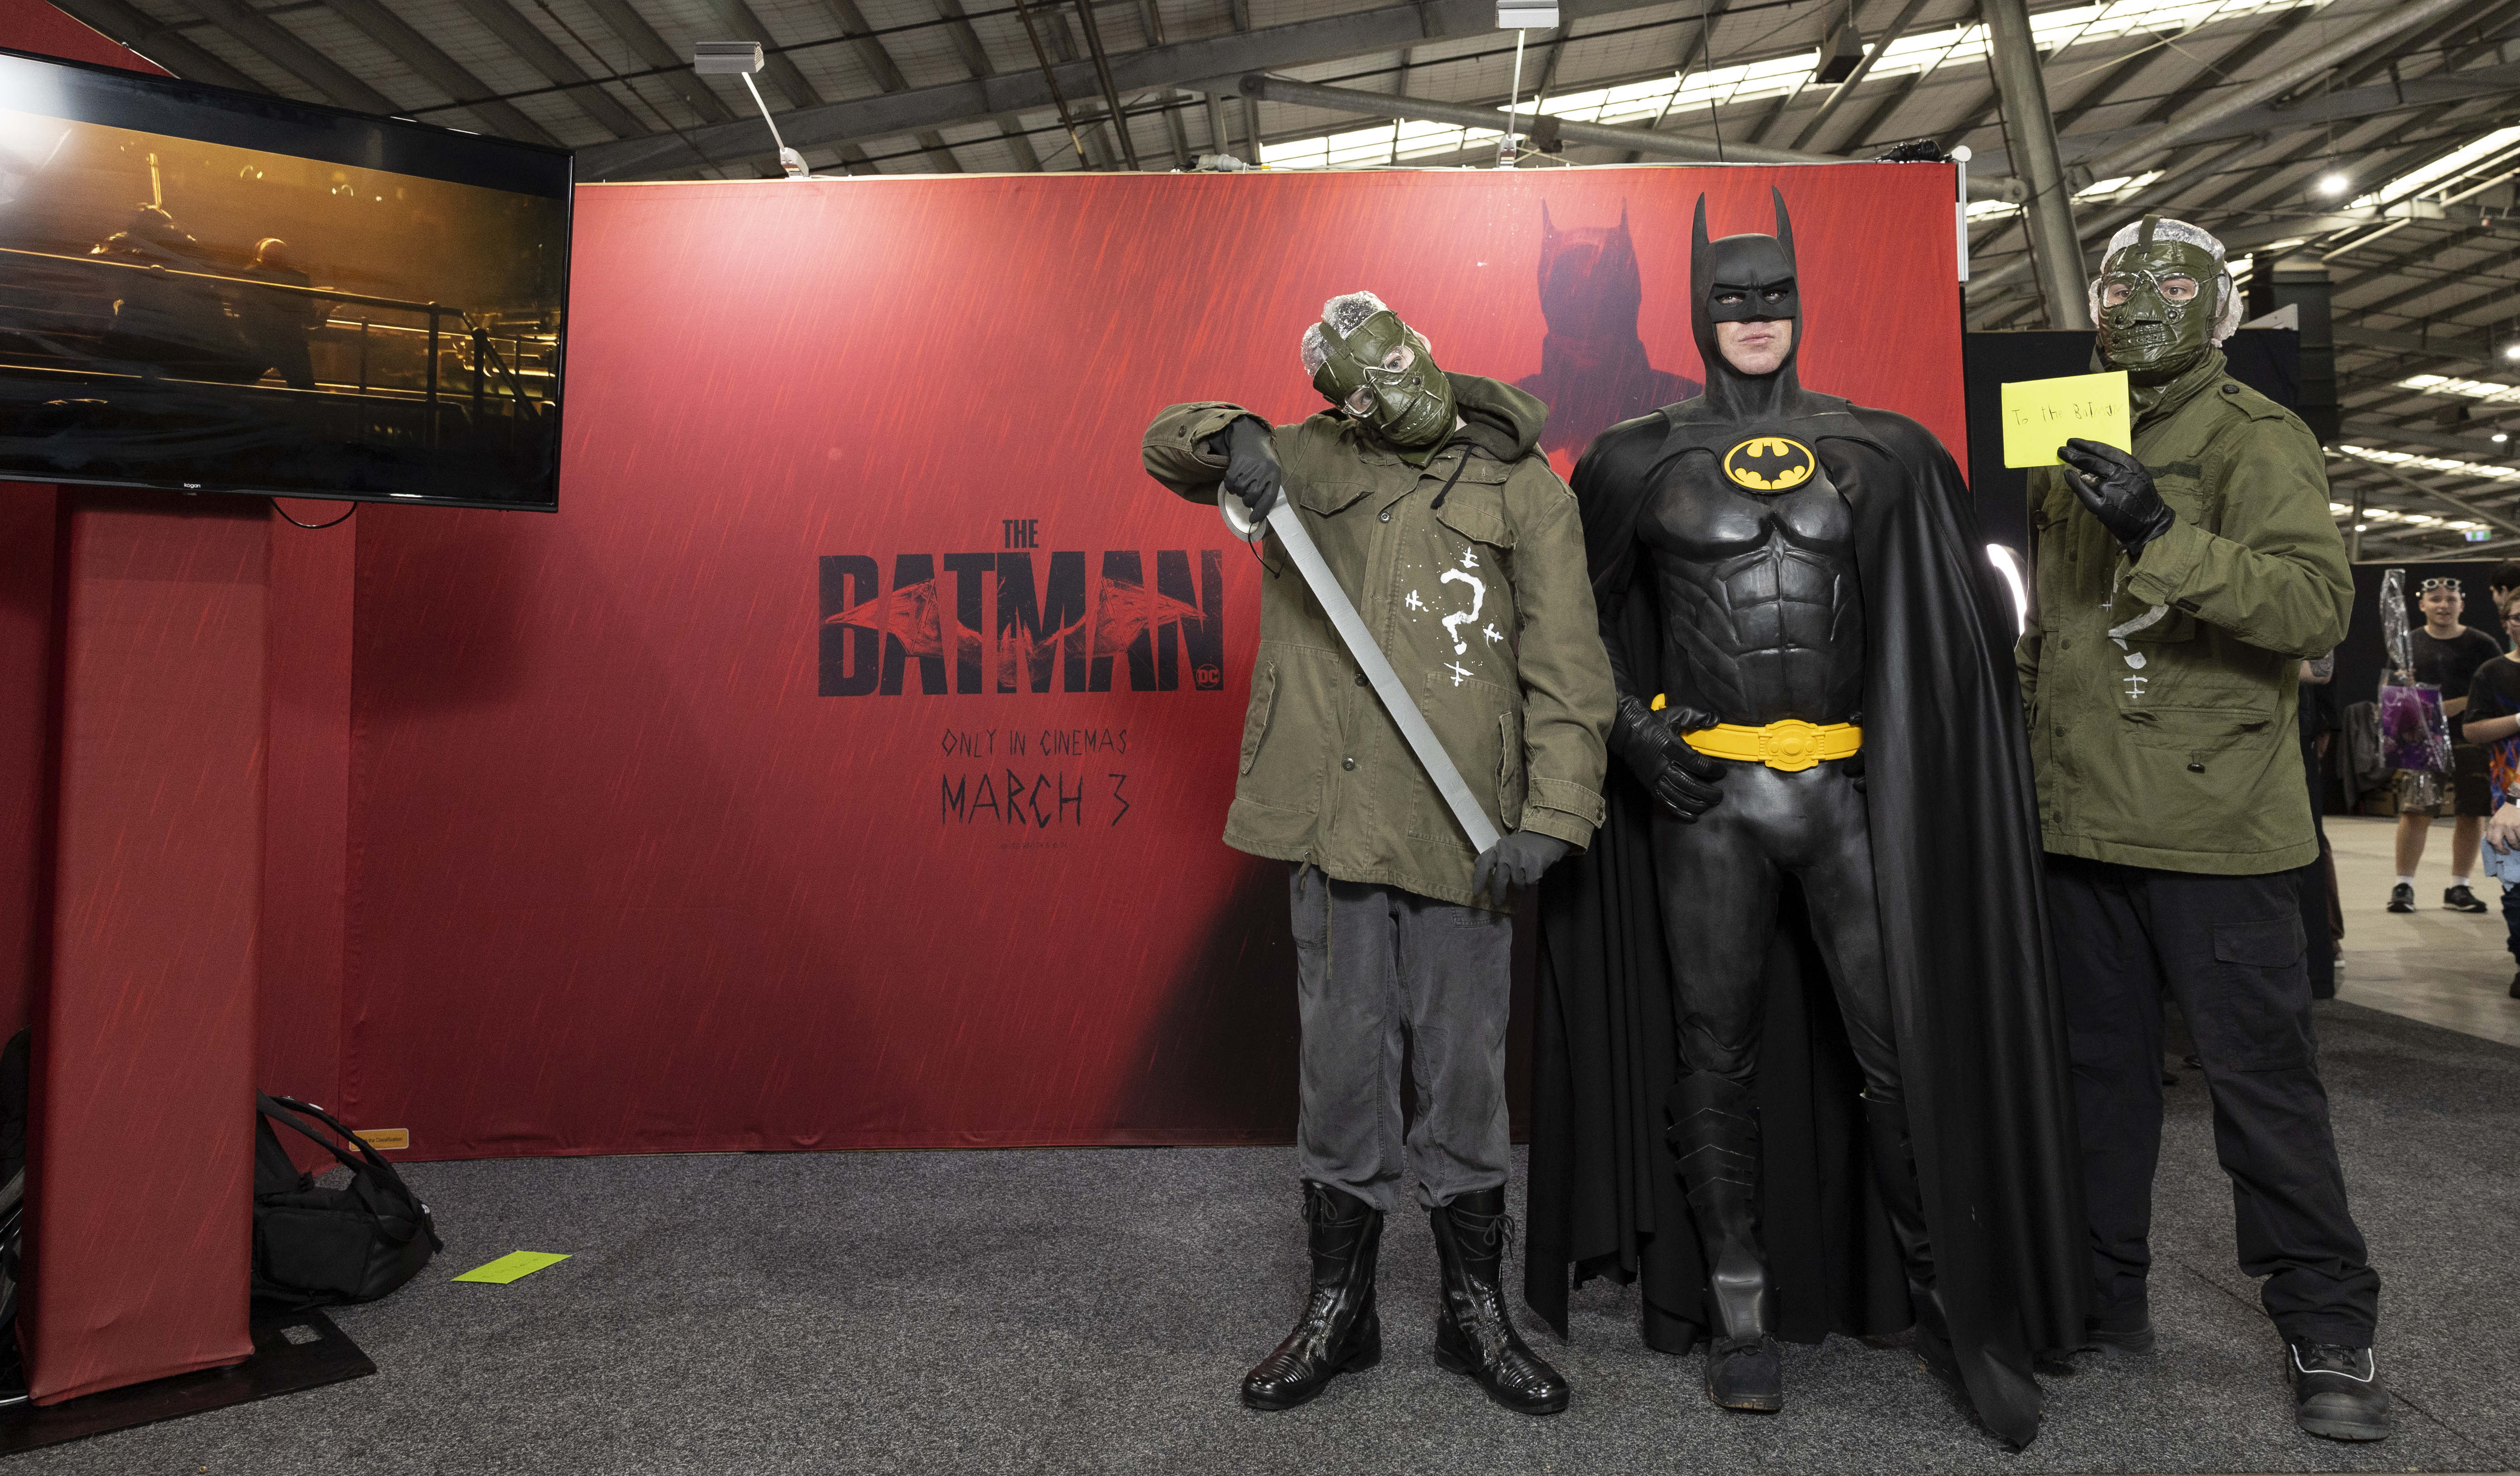 The Batman - The Riddler Costume Build Thread | RPF Costume and Prop Maker  Community